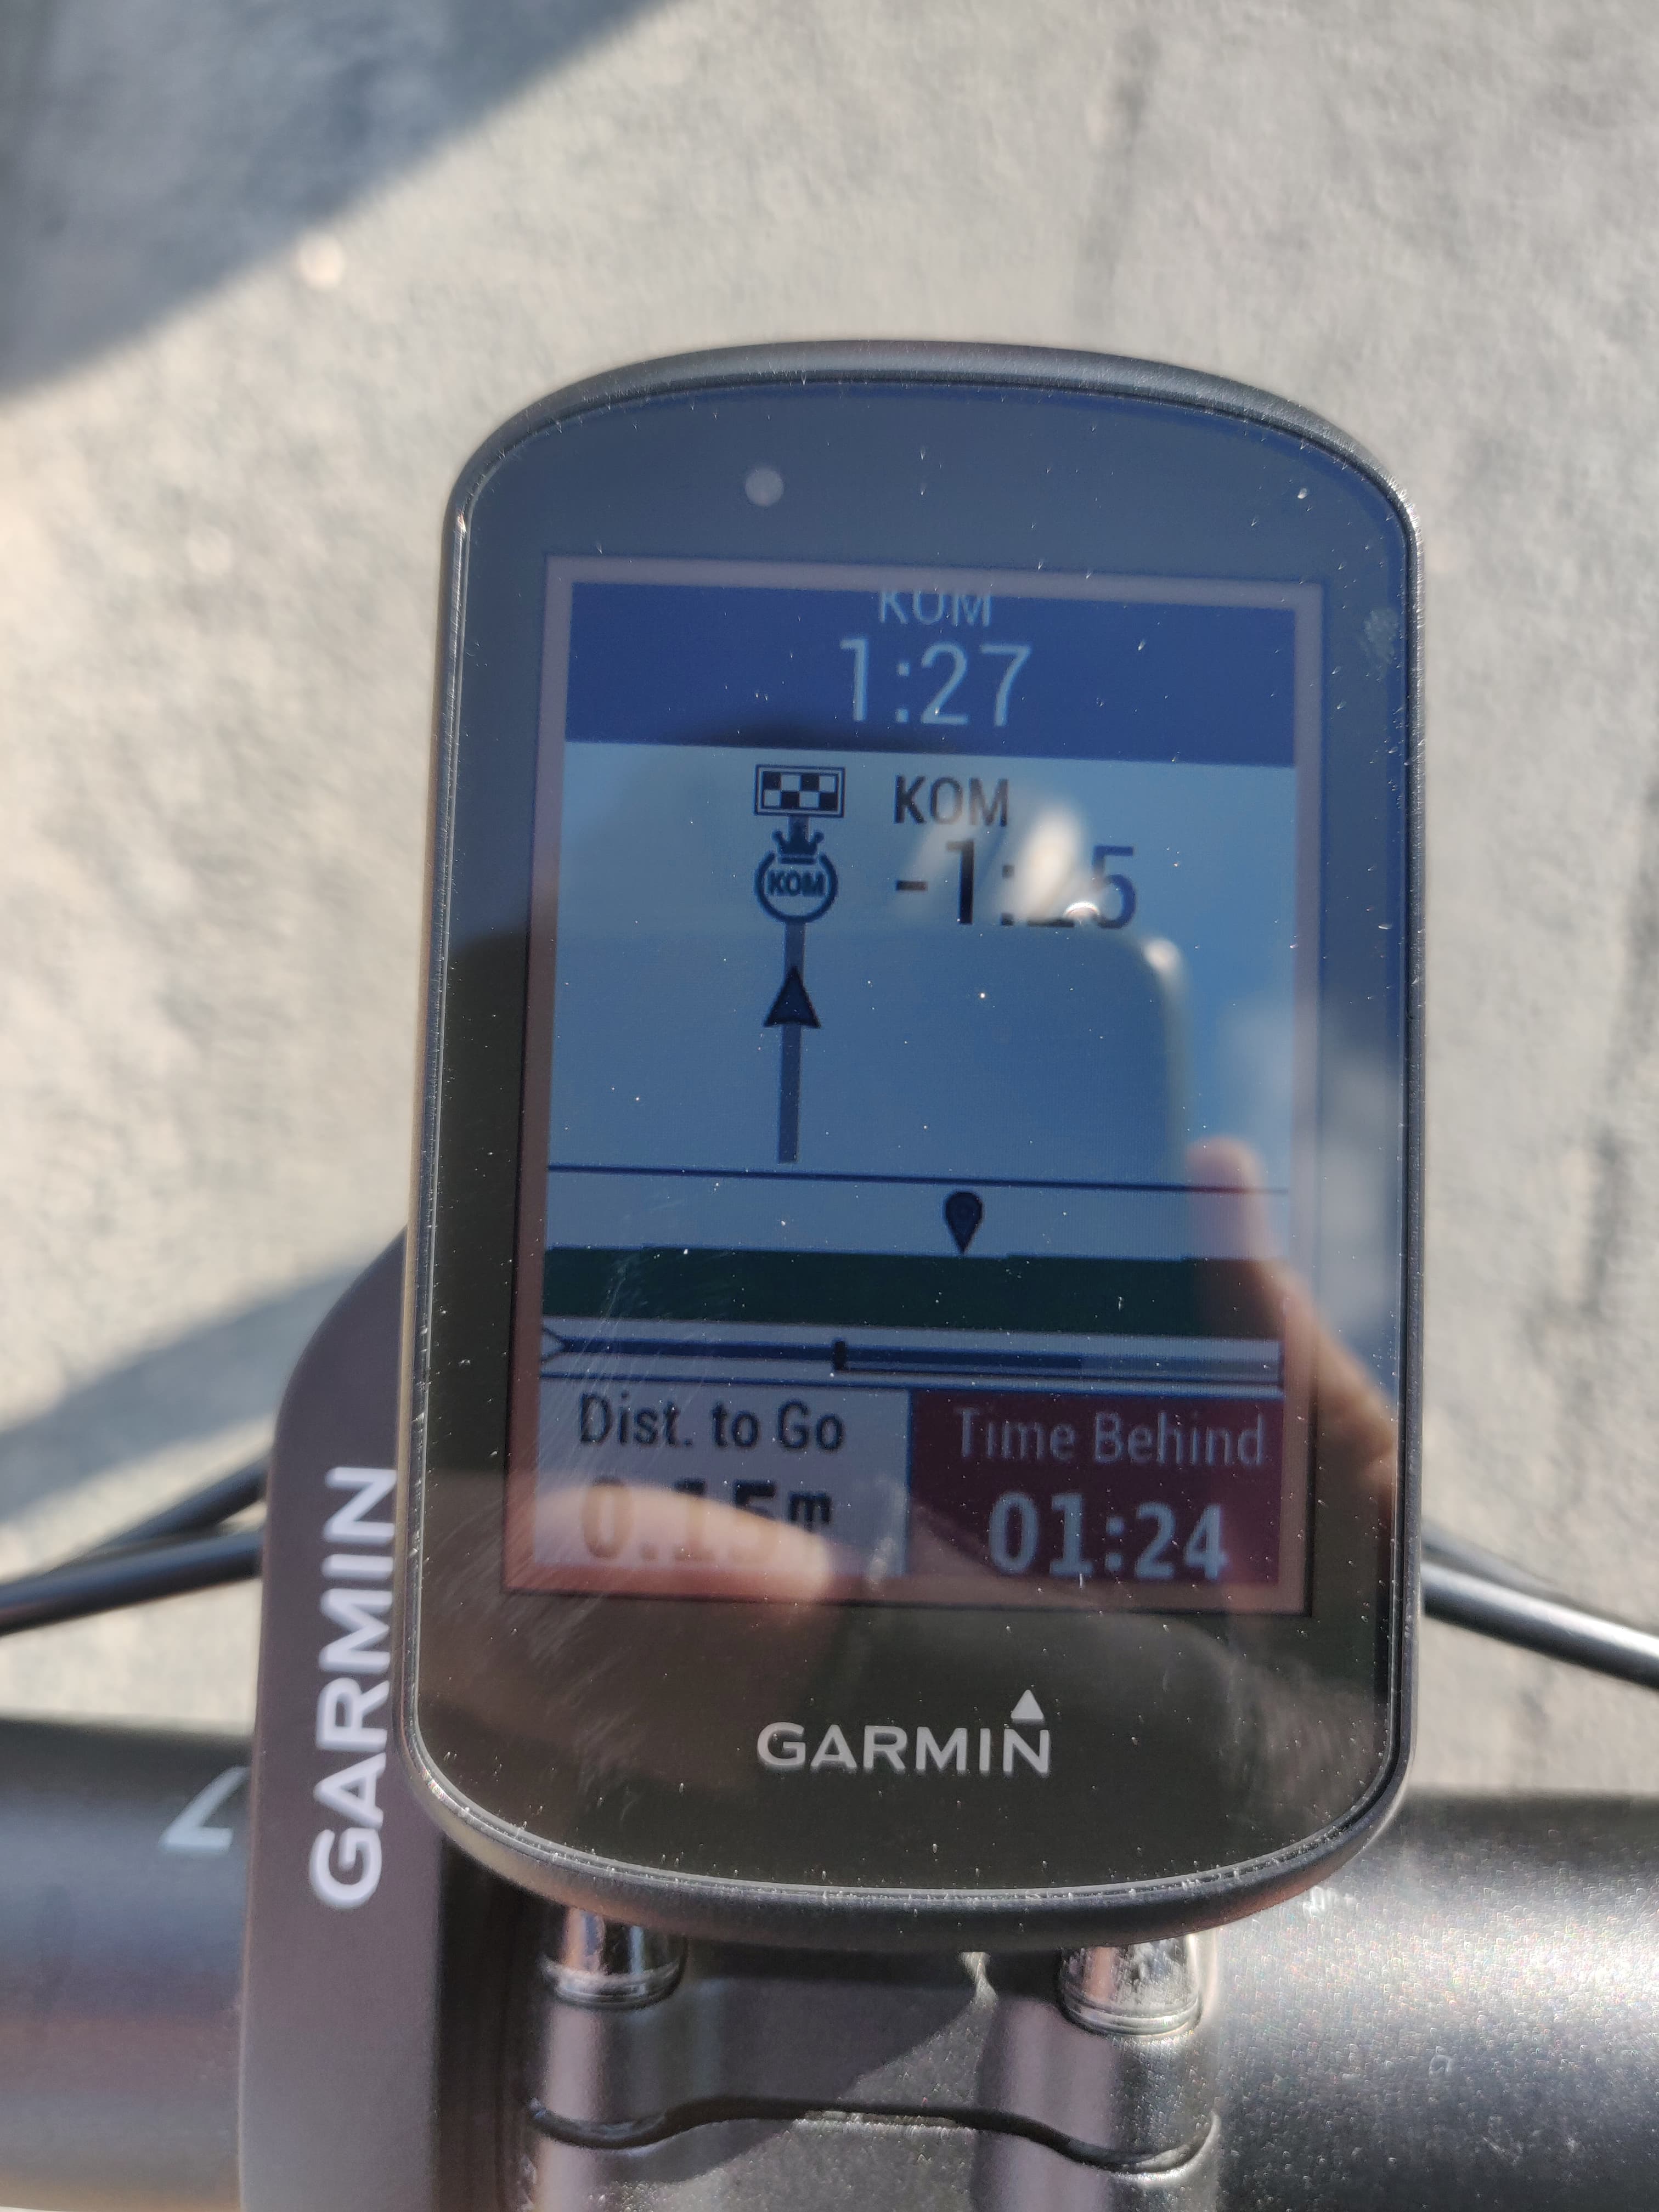 Garmin 530 live segments - Edge 530 - Cycling - Garmin Forums